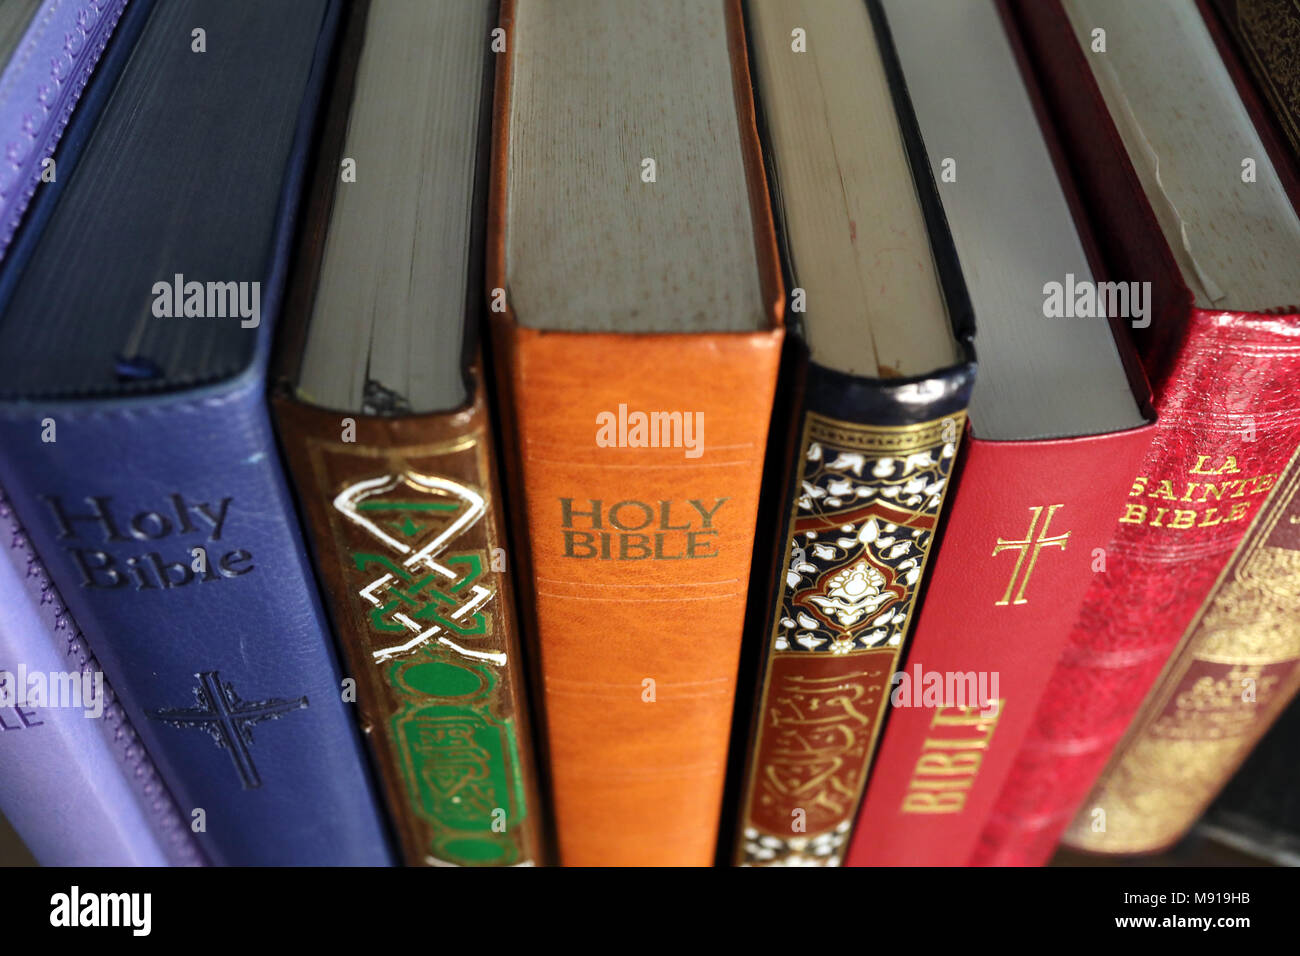 Libros sagrados fotografías e imágenes de alta resolución - Alamy